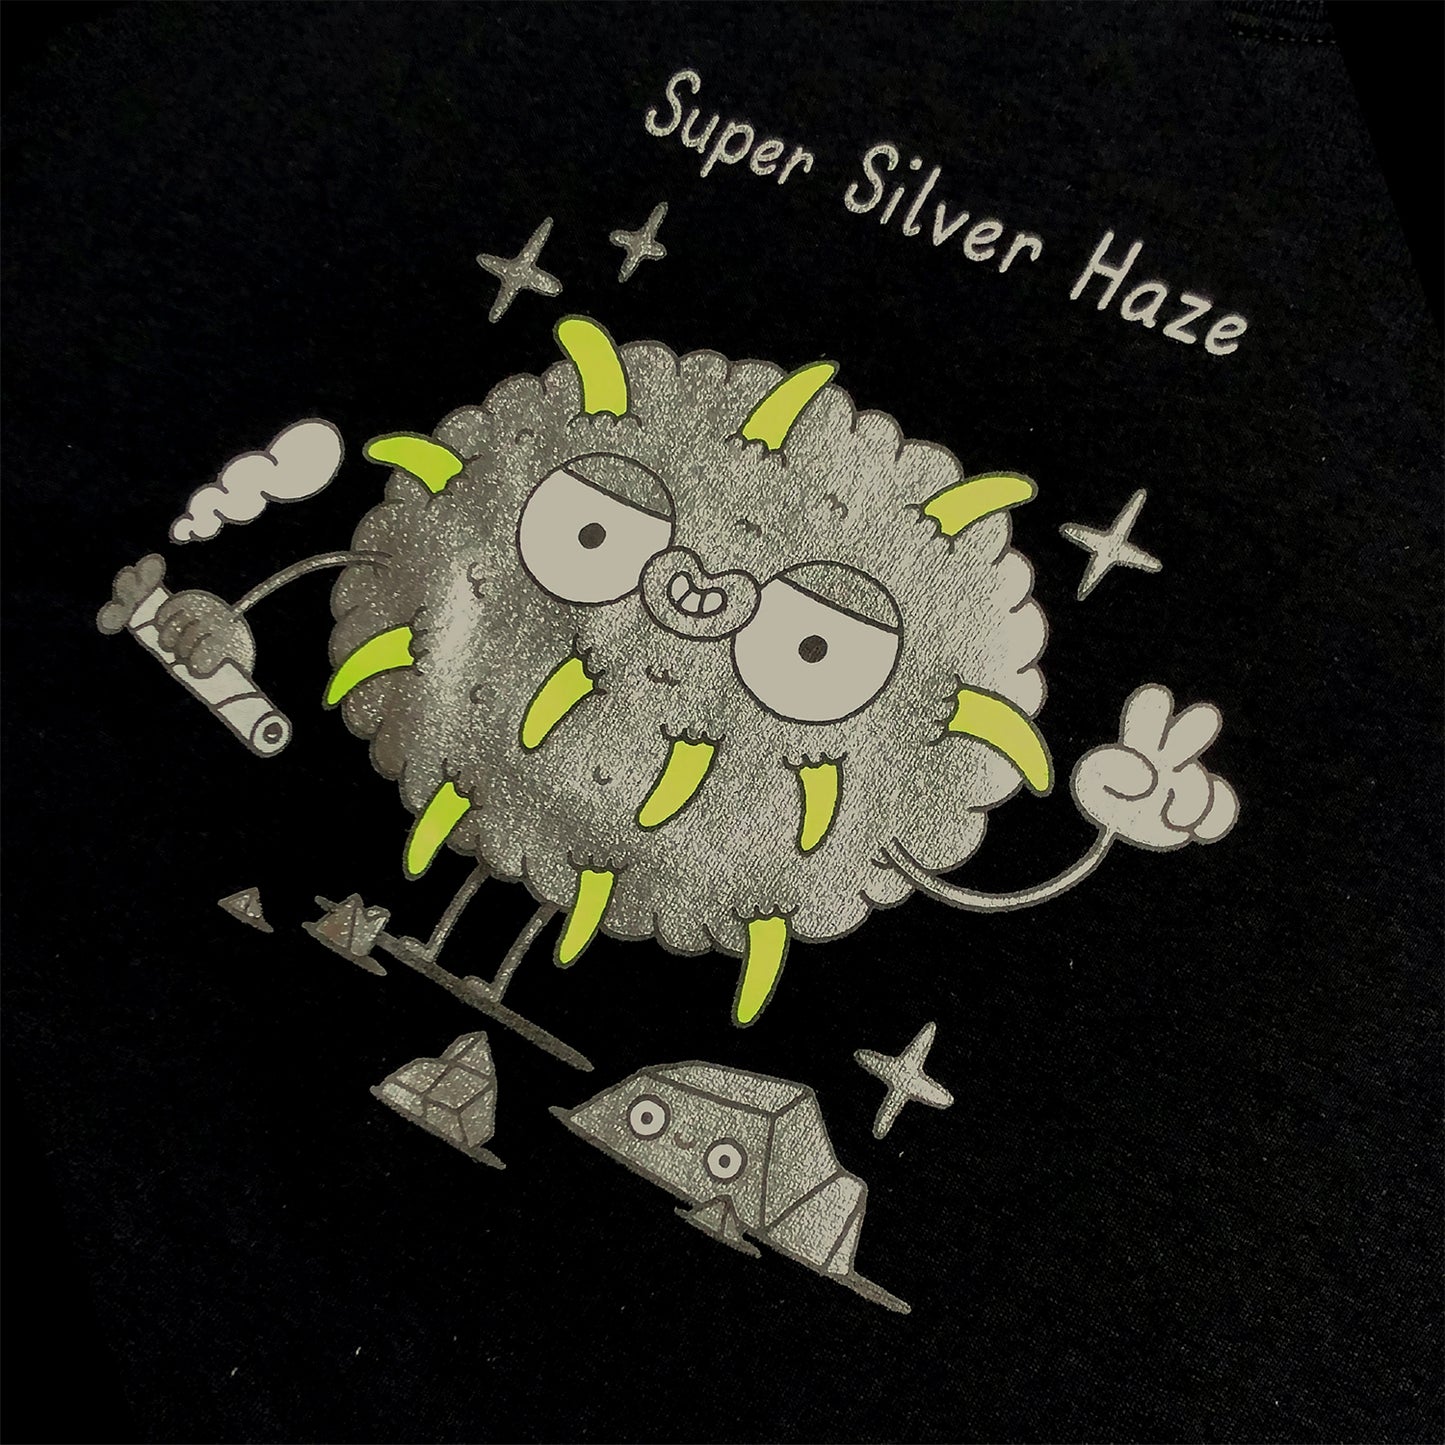 SOTD - Super Silver Haze